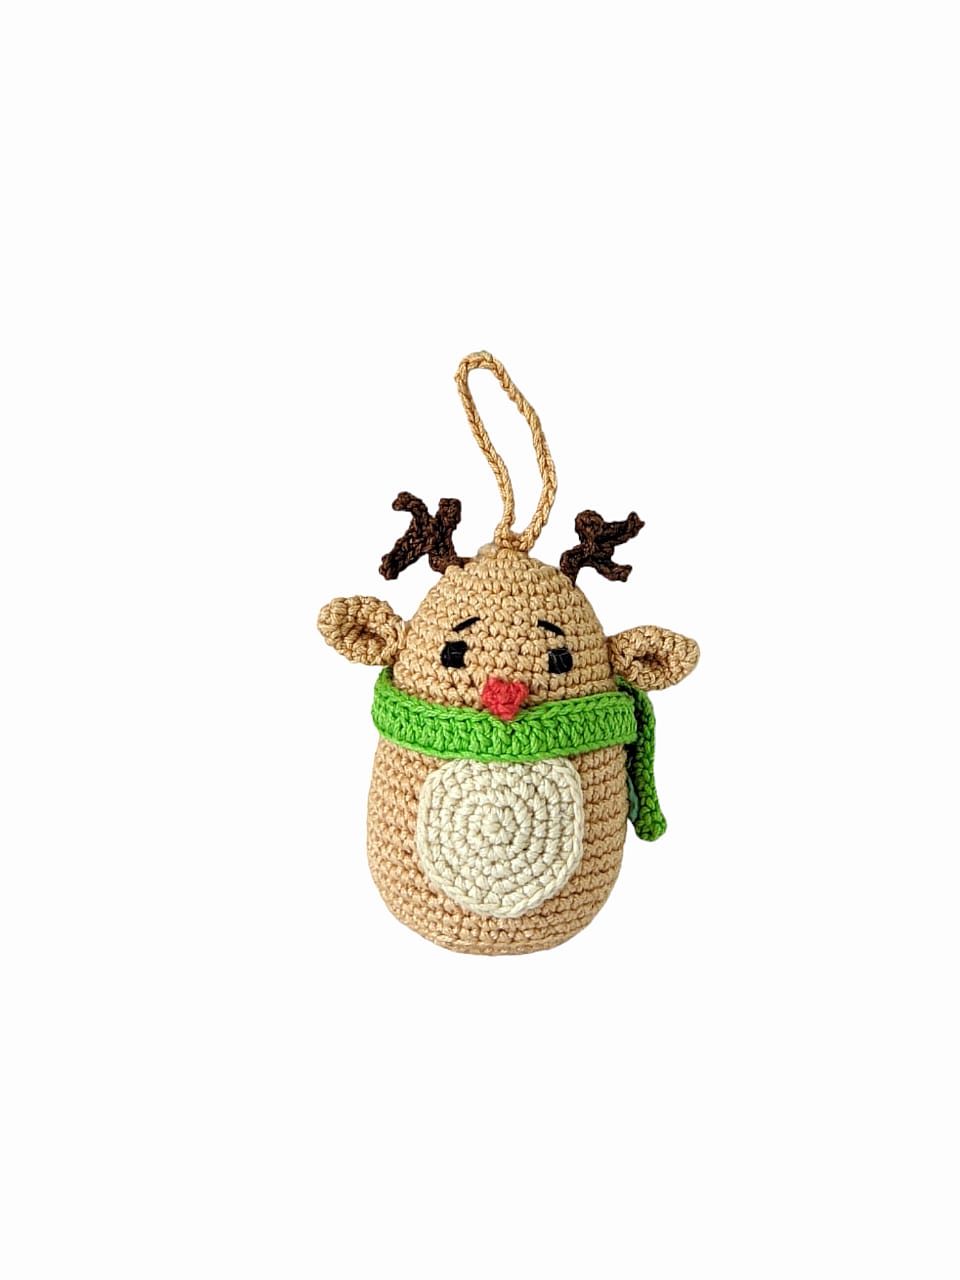 Handcrafted Crochet Christmas Tree Ornament- Reindeer